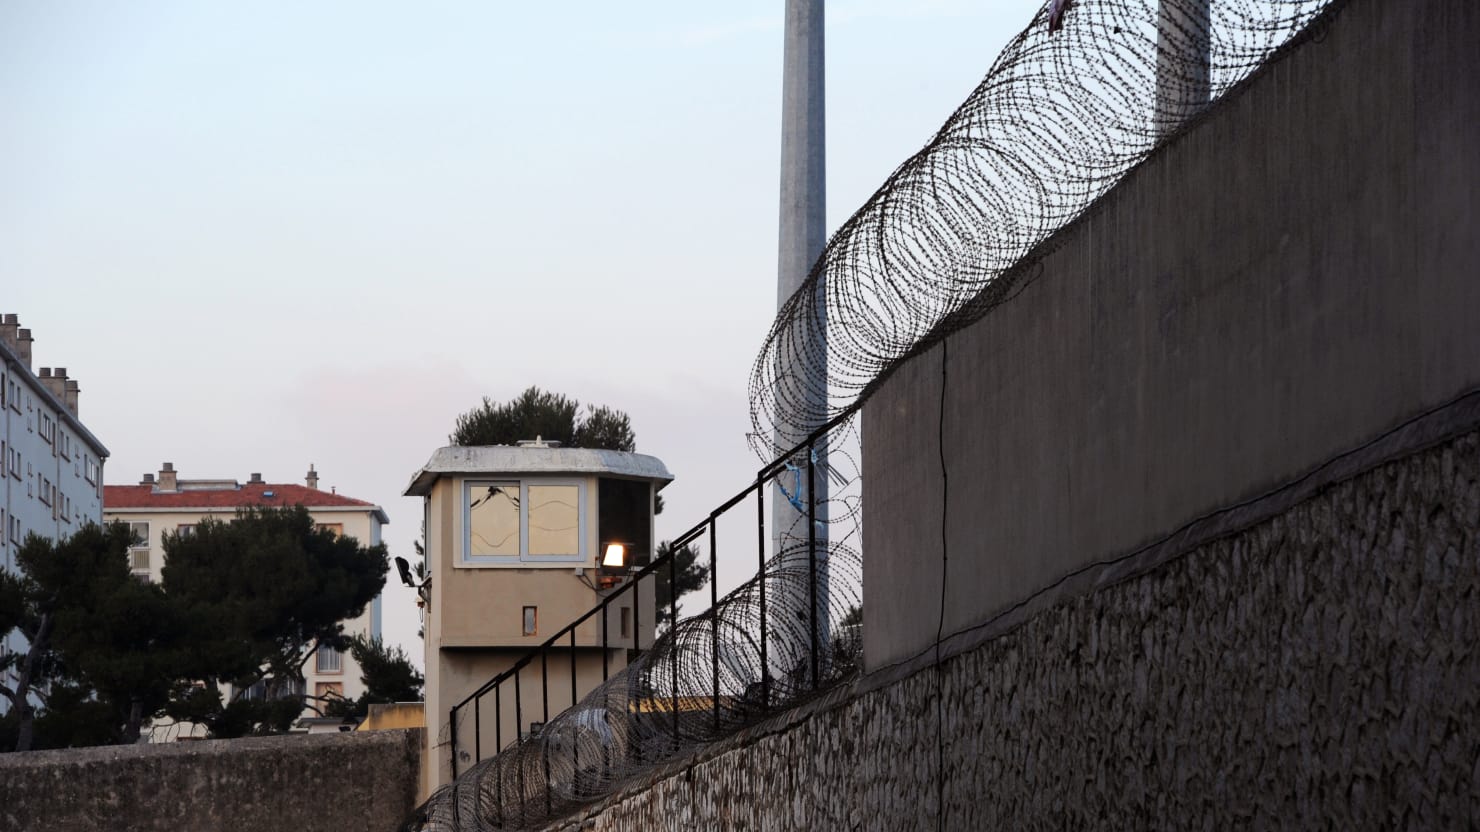 130605 ferranti prisonmexico tease k2urhn - The Terrorist Threat in France: A Look at Prison Radicalization